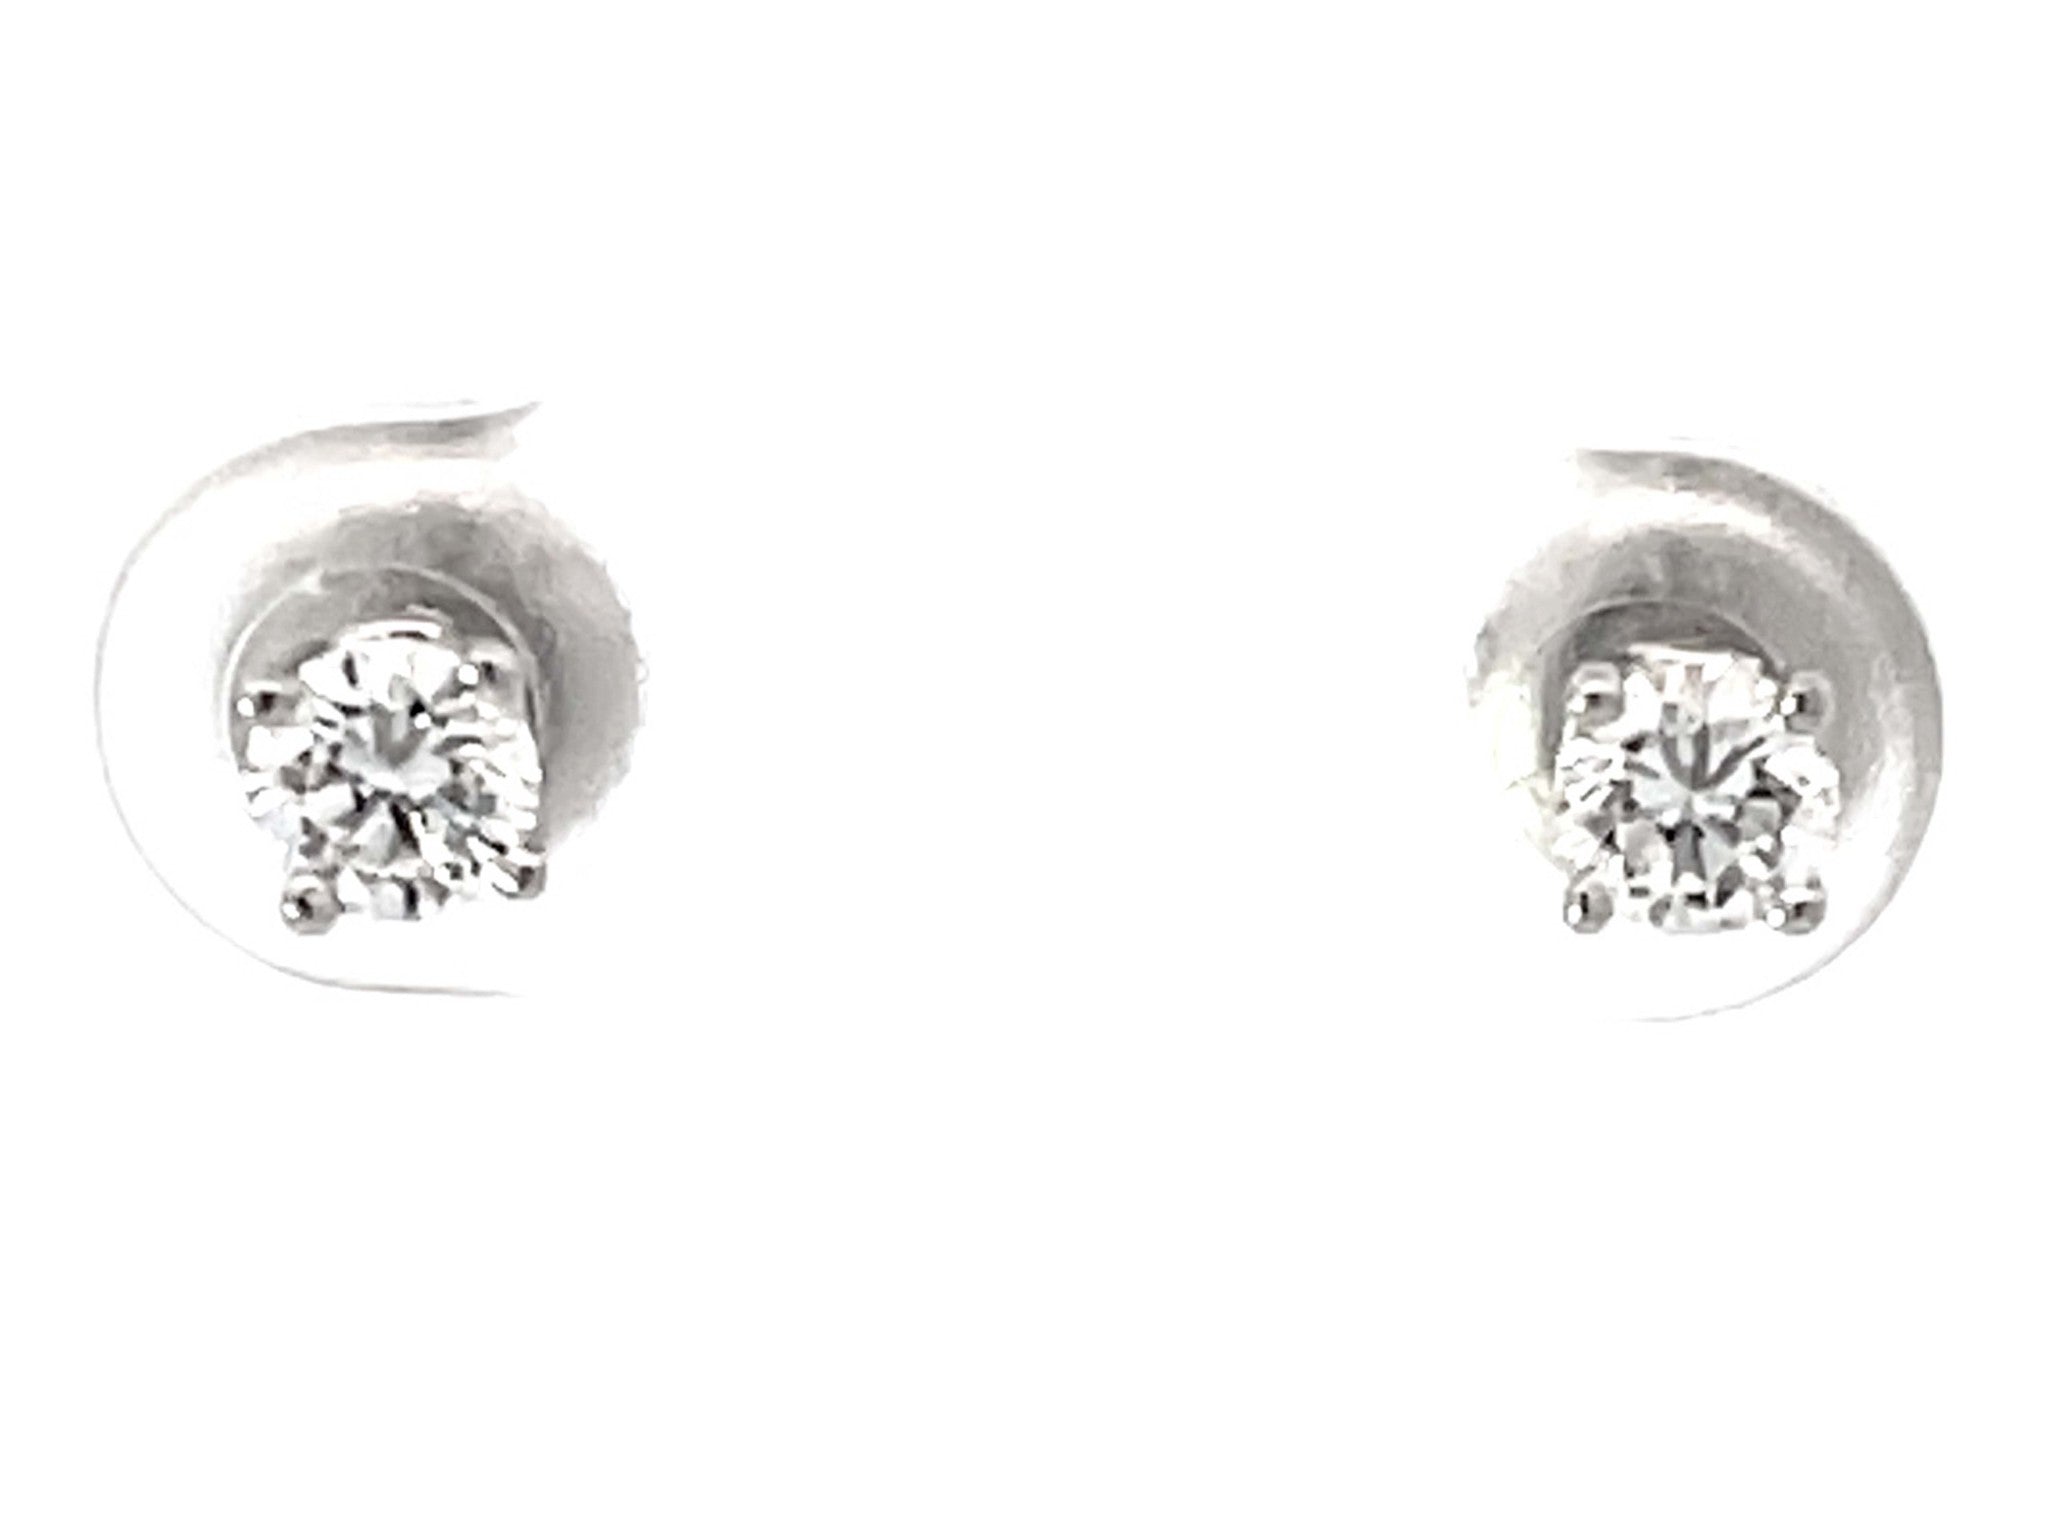 Tiffany Solitaire Diamond Stud Earrings in Platinum